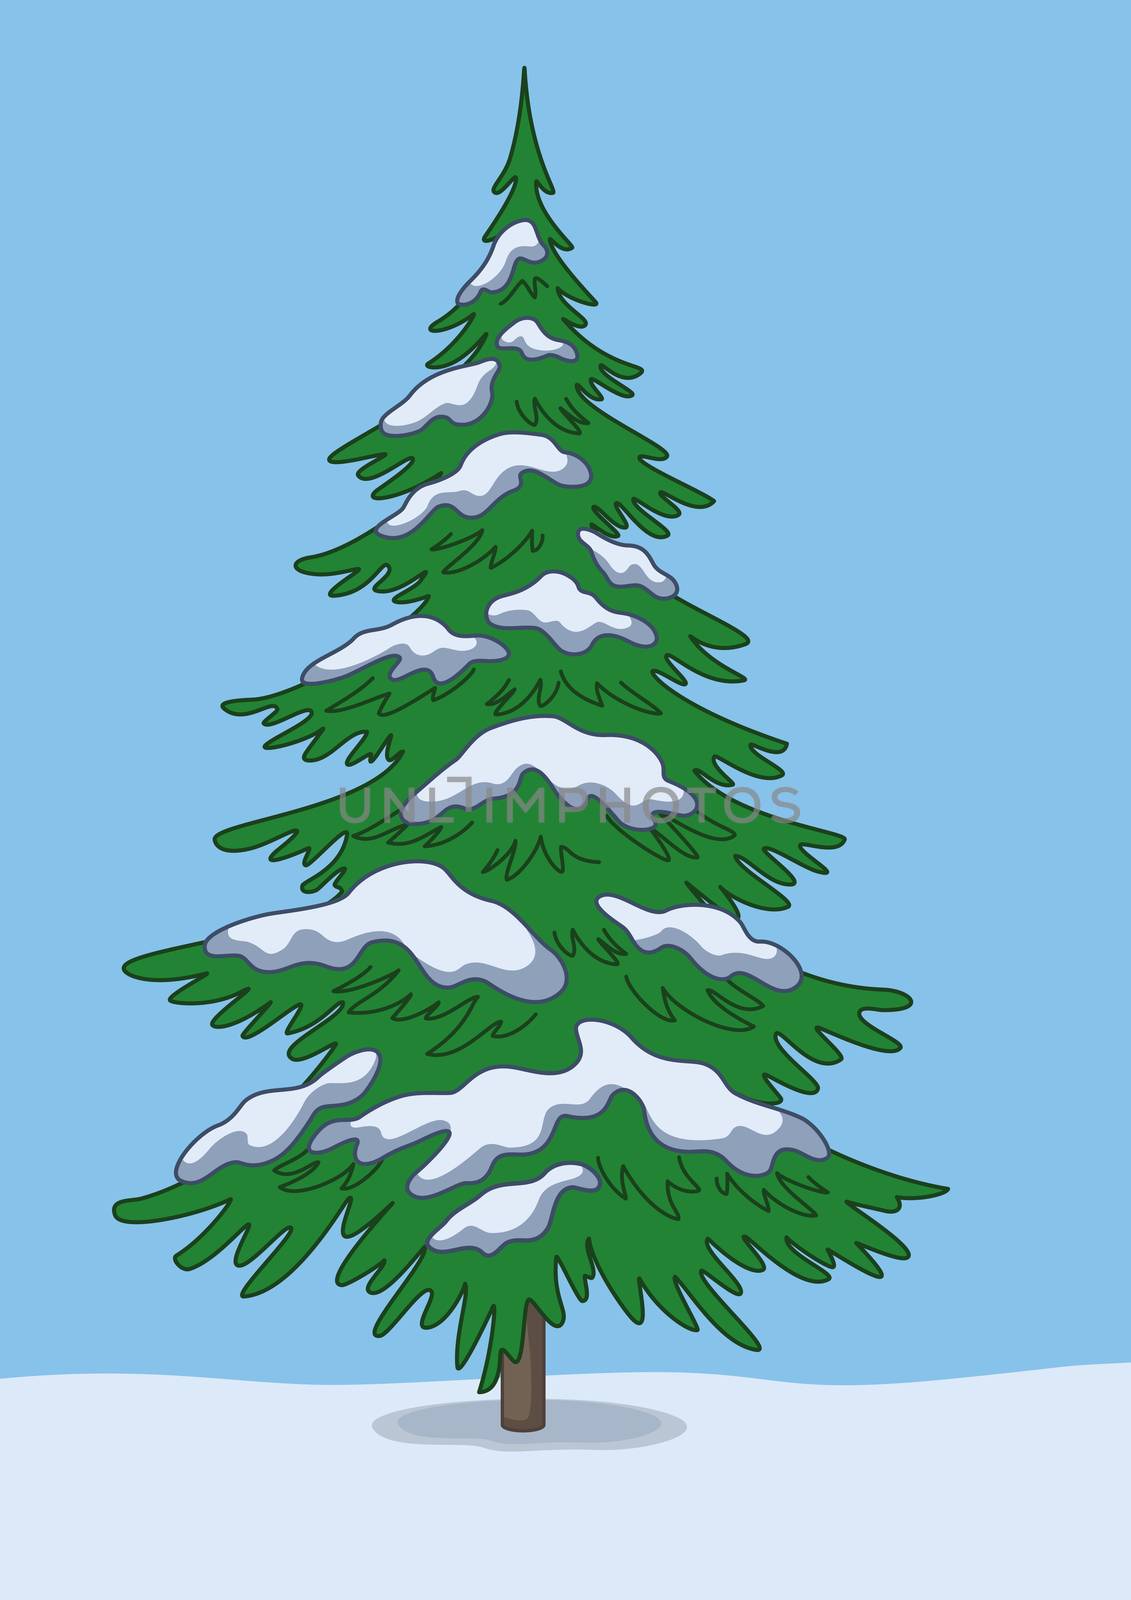 Christmas green tree, snow and blue sky.